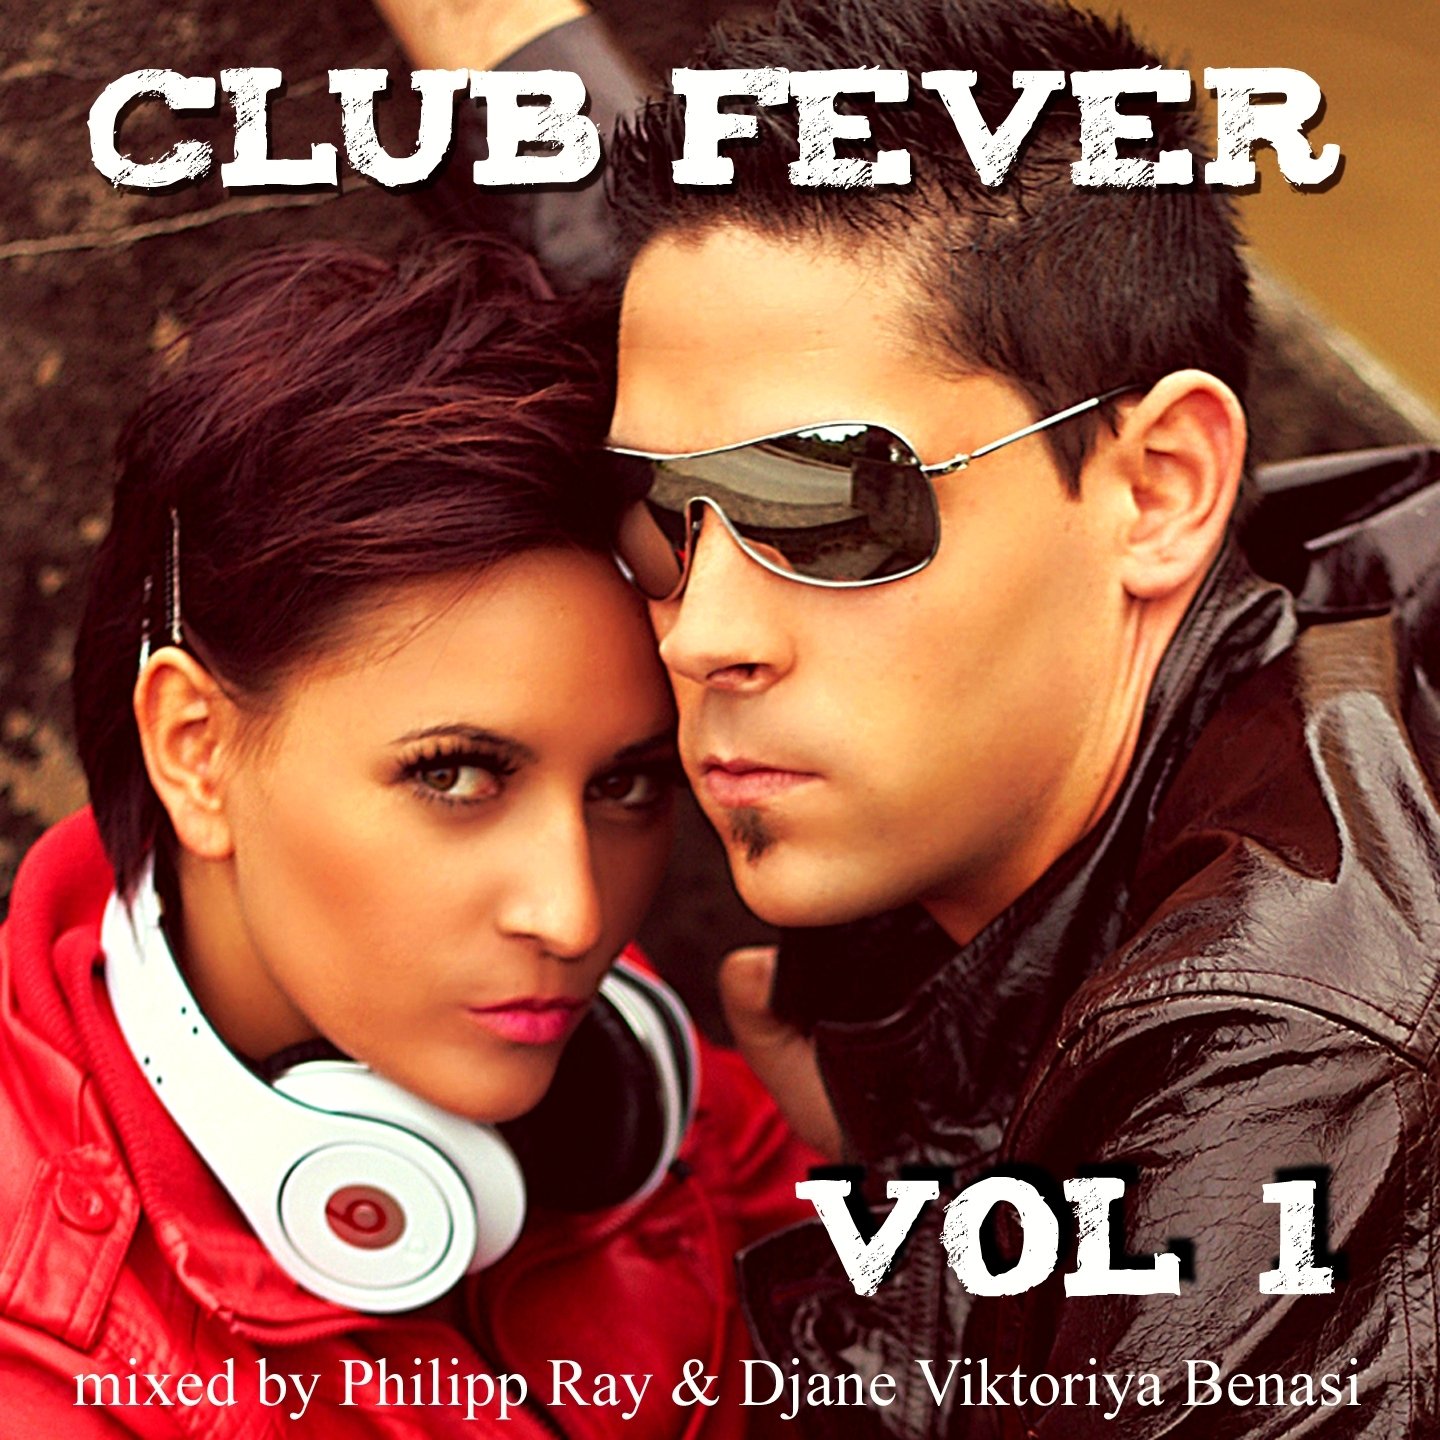 Песня radio version. Nightclub Fever. Melody Club Fever Fever кто на обложке.